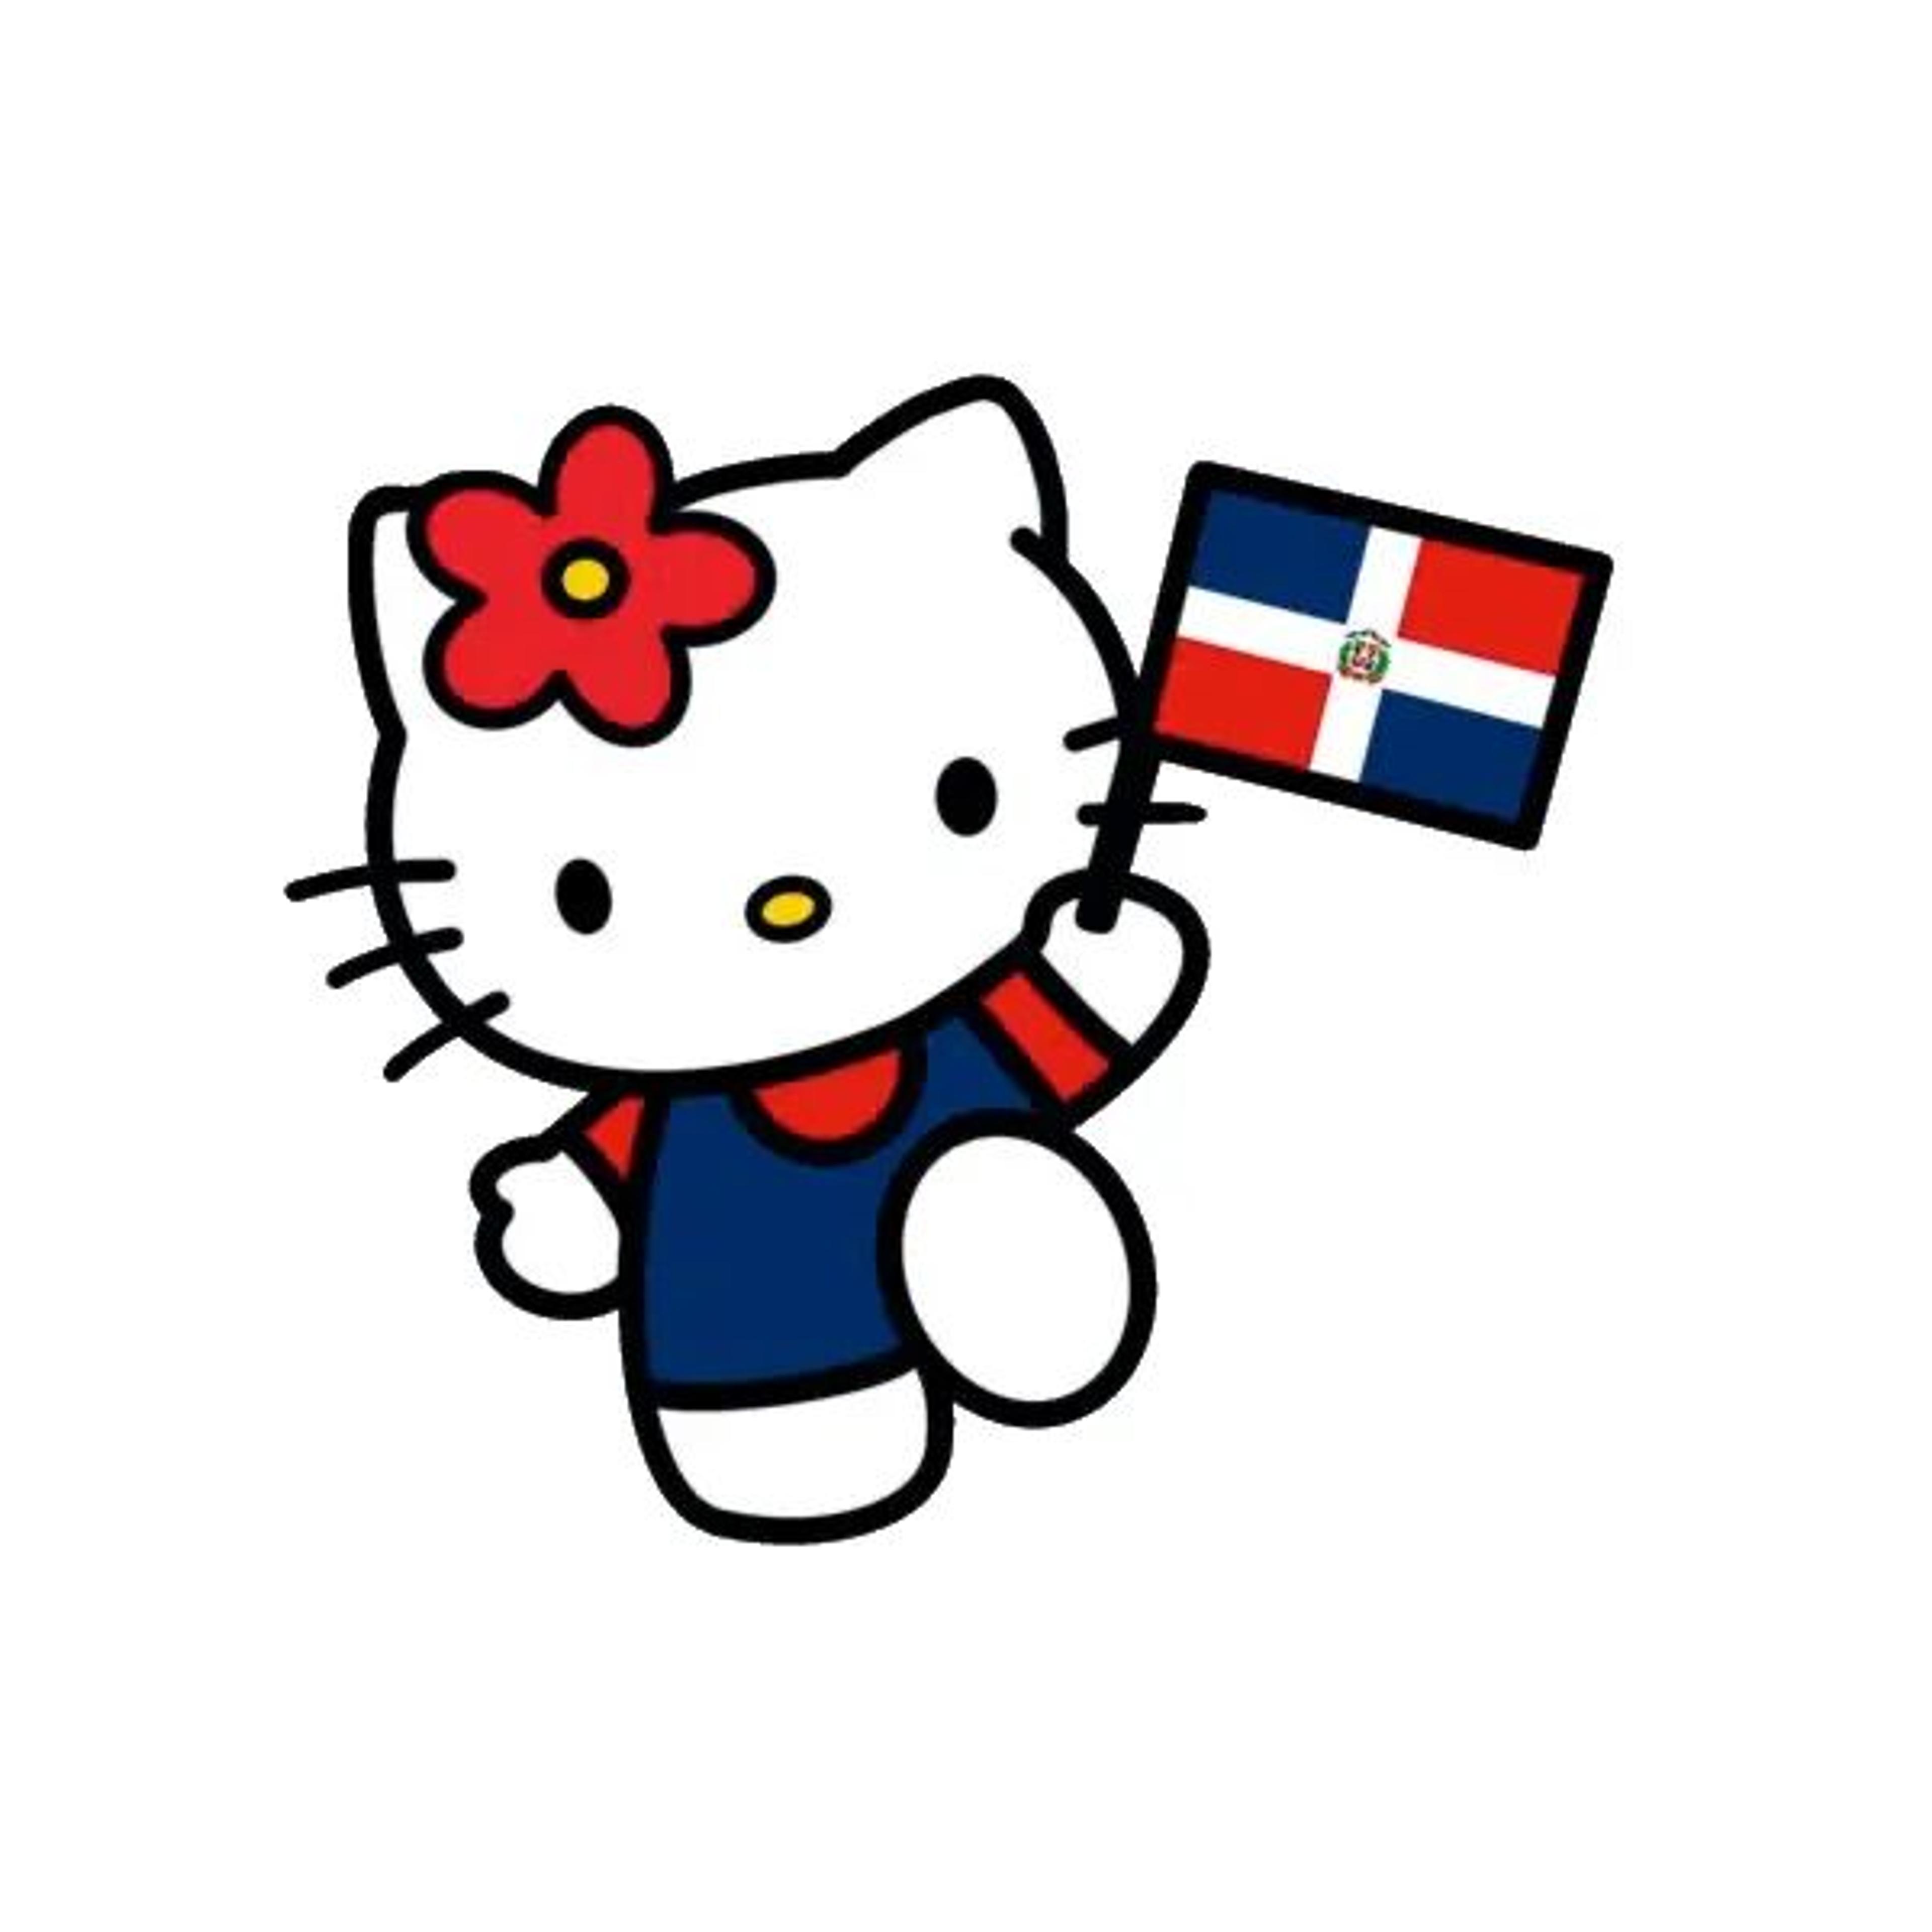 Dominican republic flag-hello kitty- sticker decal,hello kitty dominicana